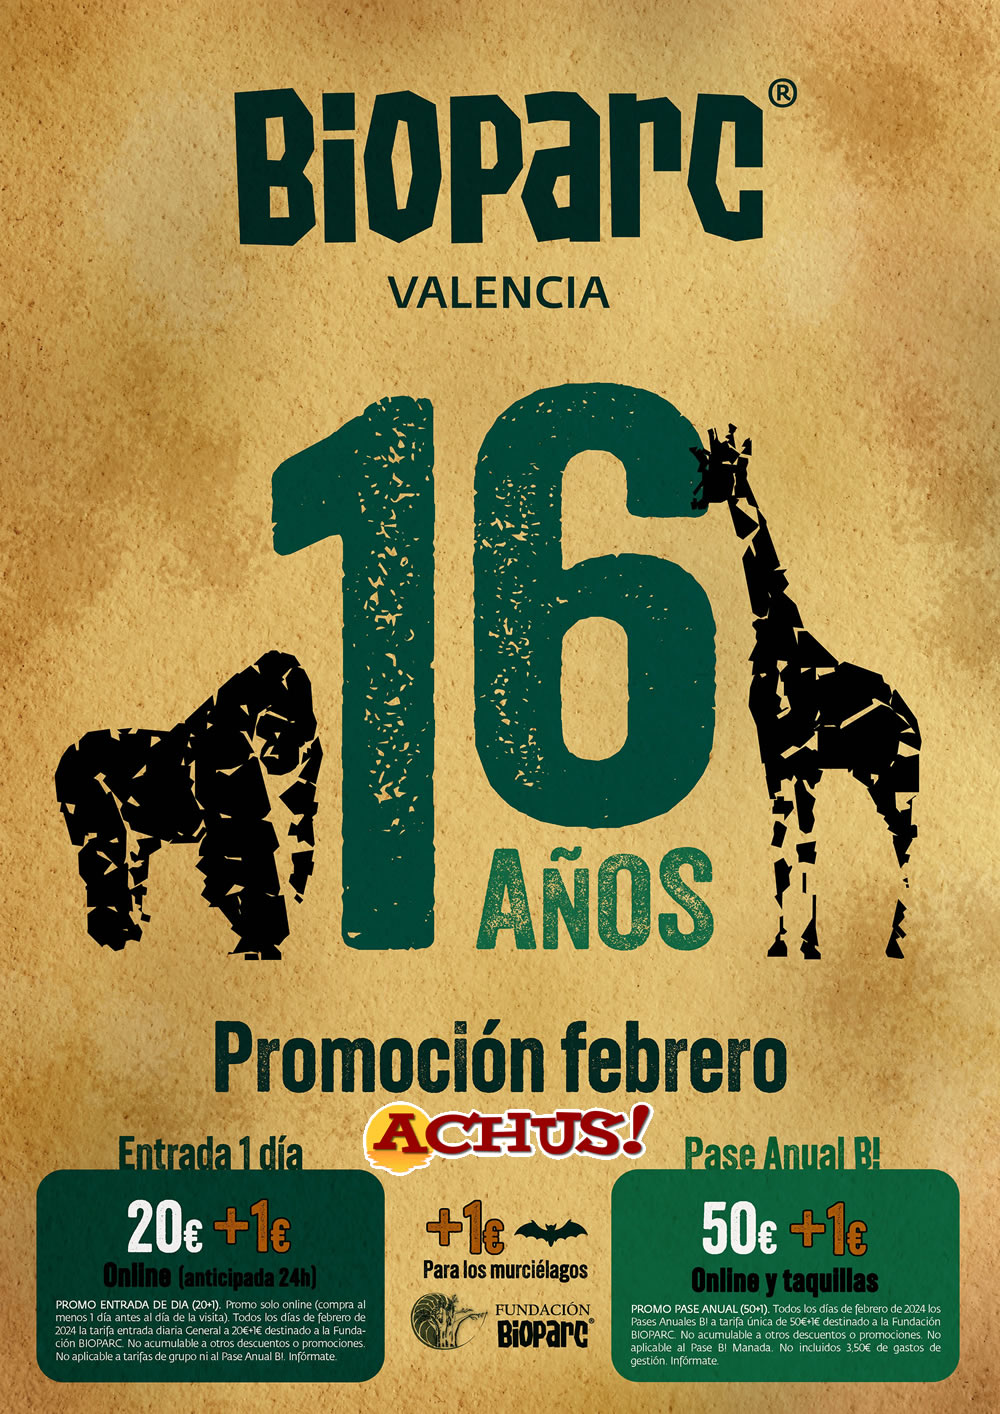 En febrero 16º aniversario “con causa” de Bioparc Valencia